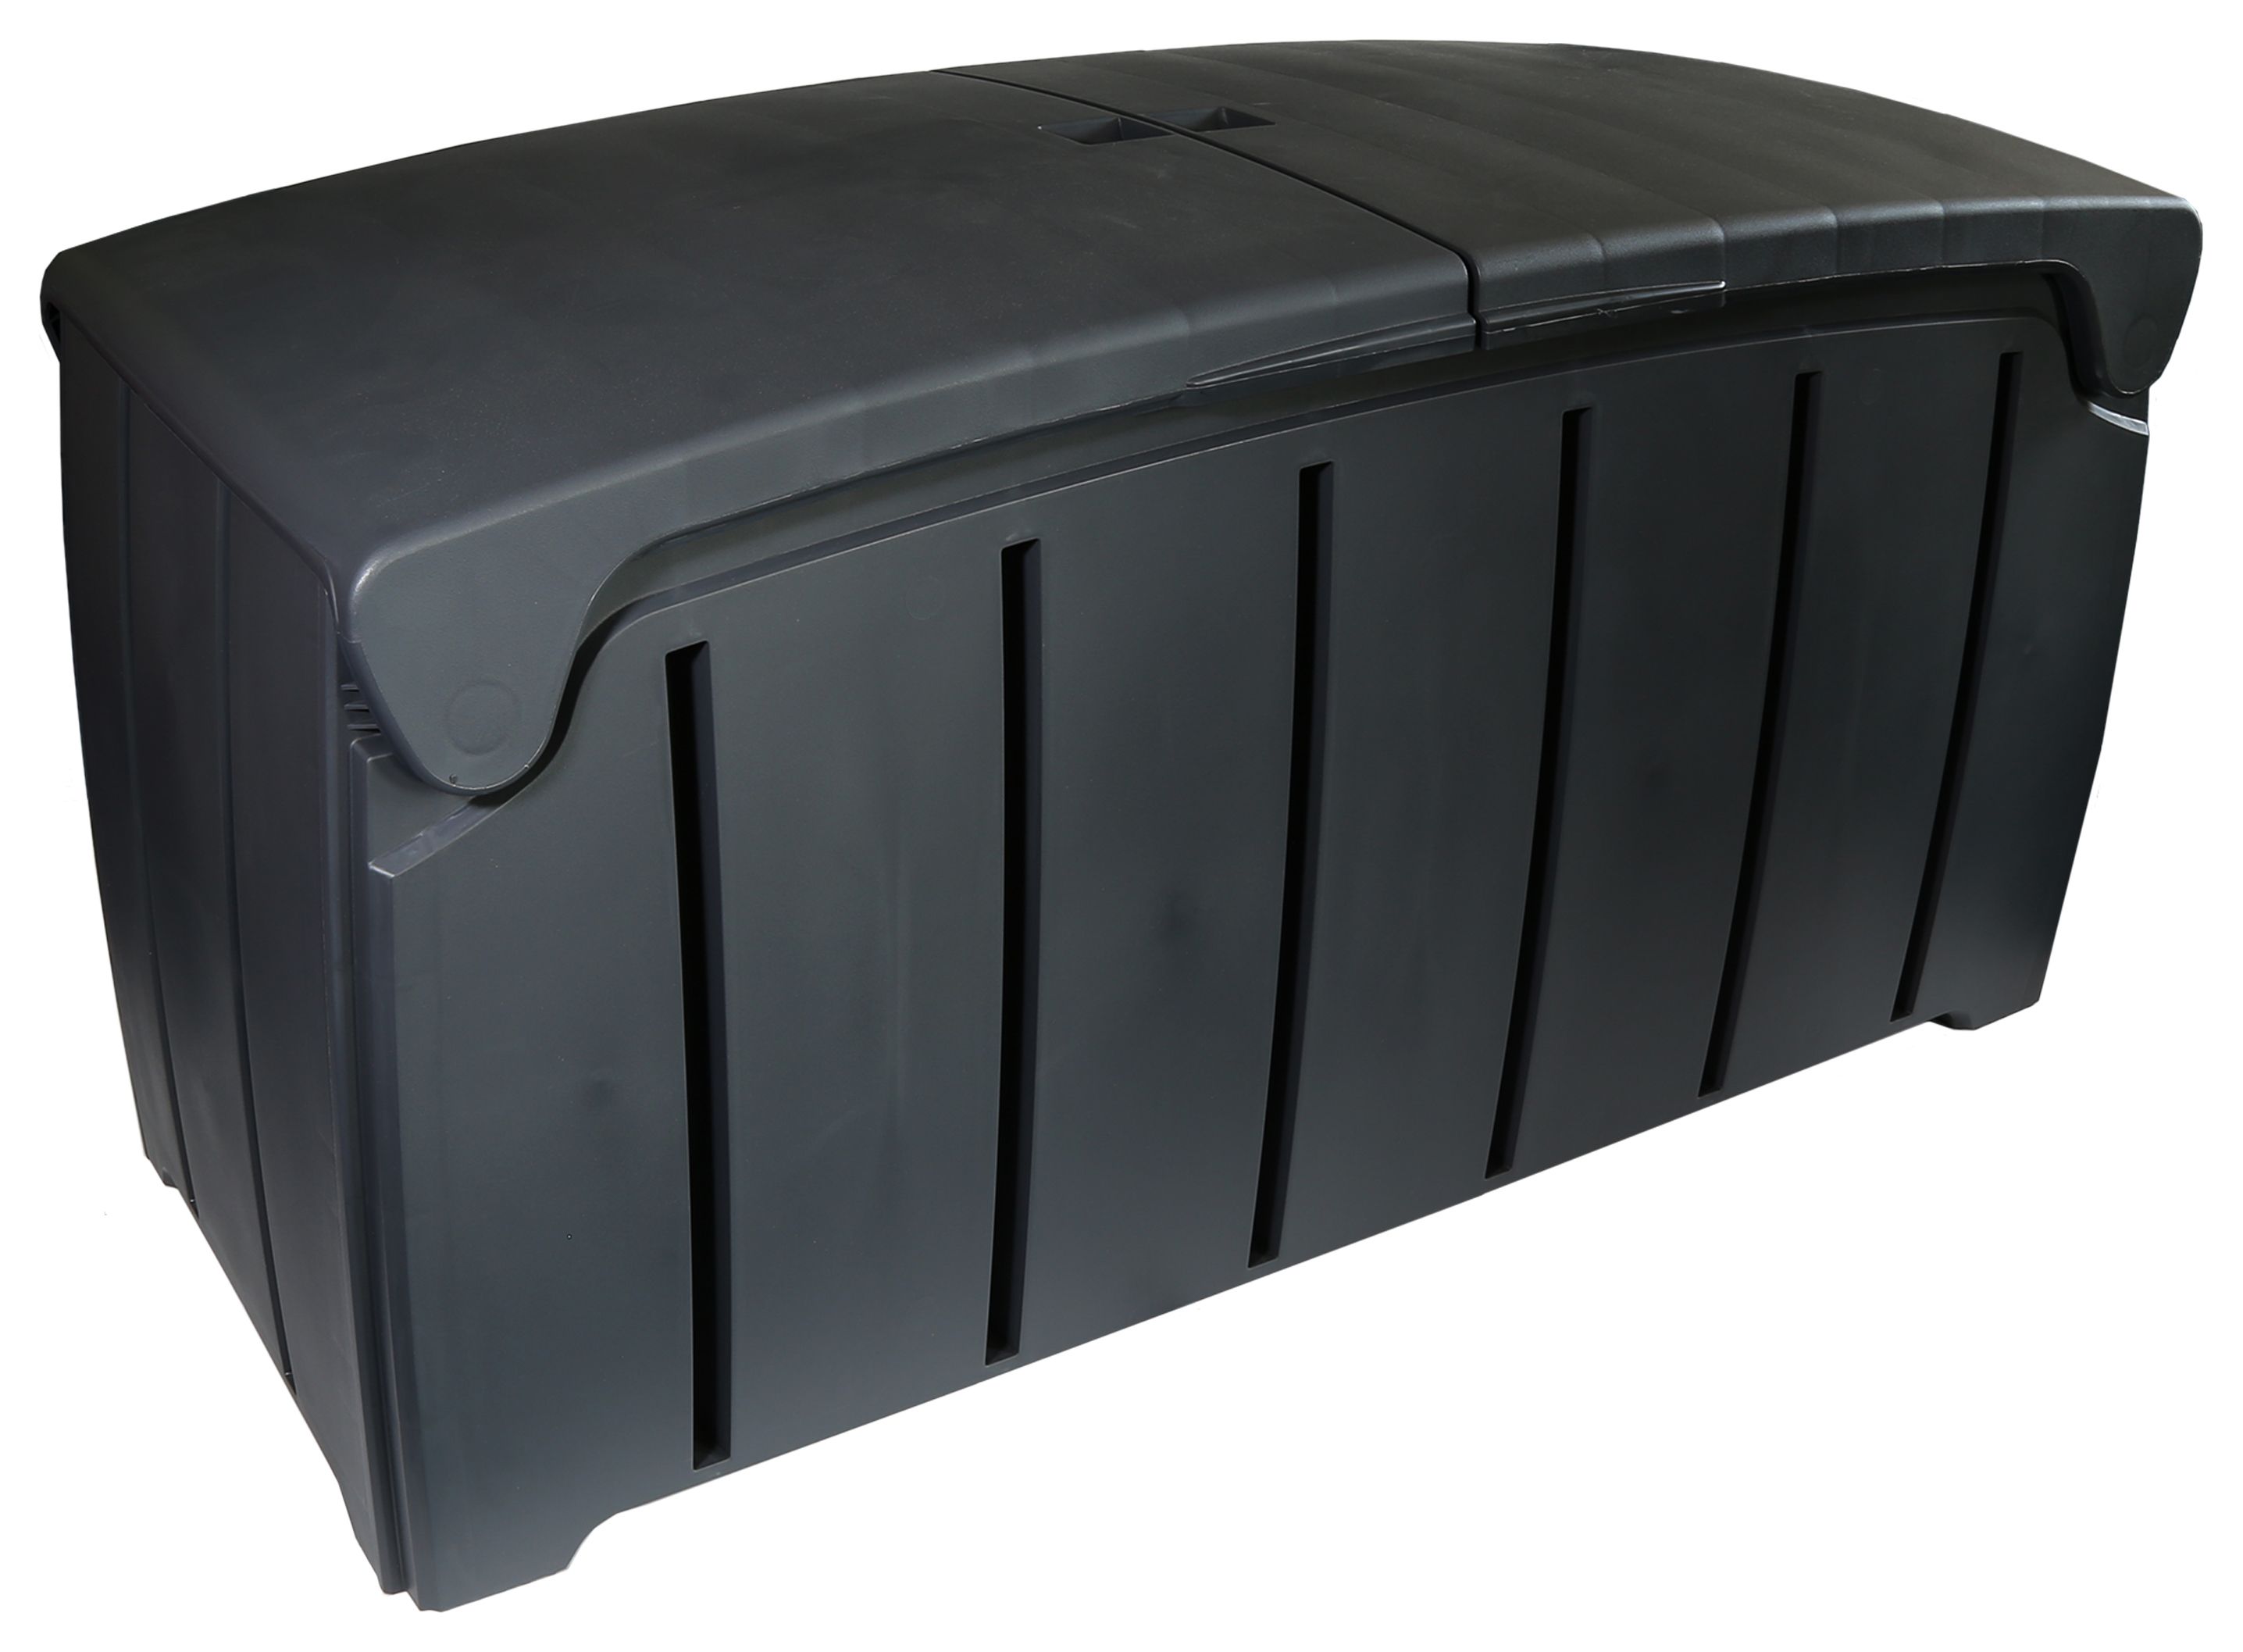 Charles Bentley 322L Ward Outdoor Plastic Storage Box - Black